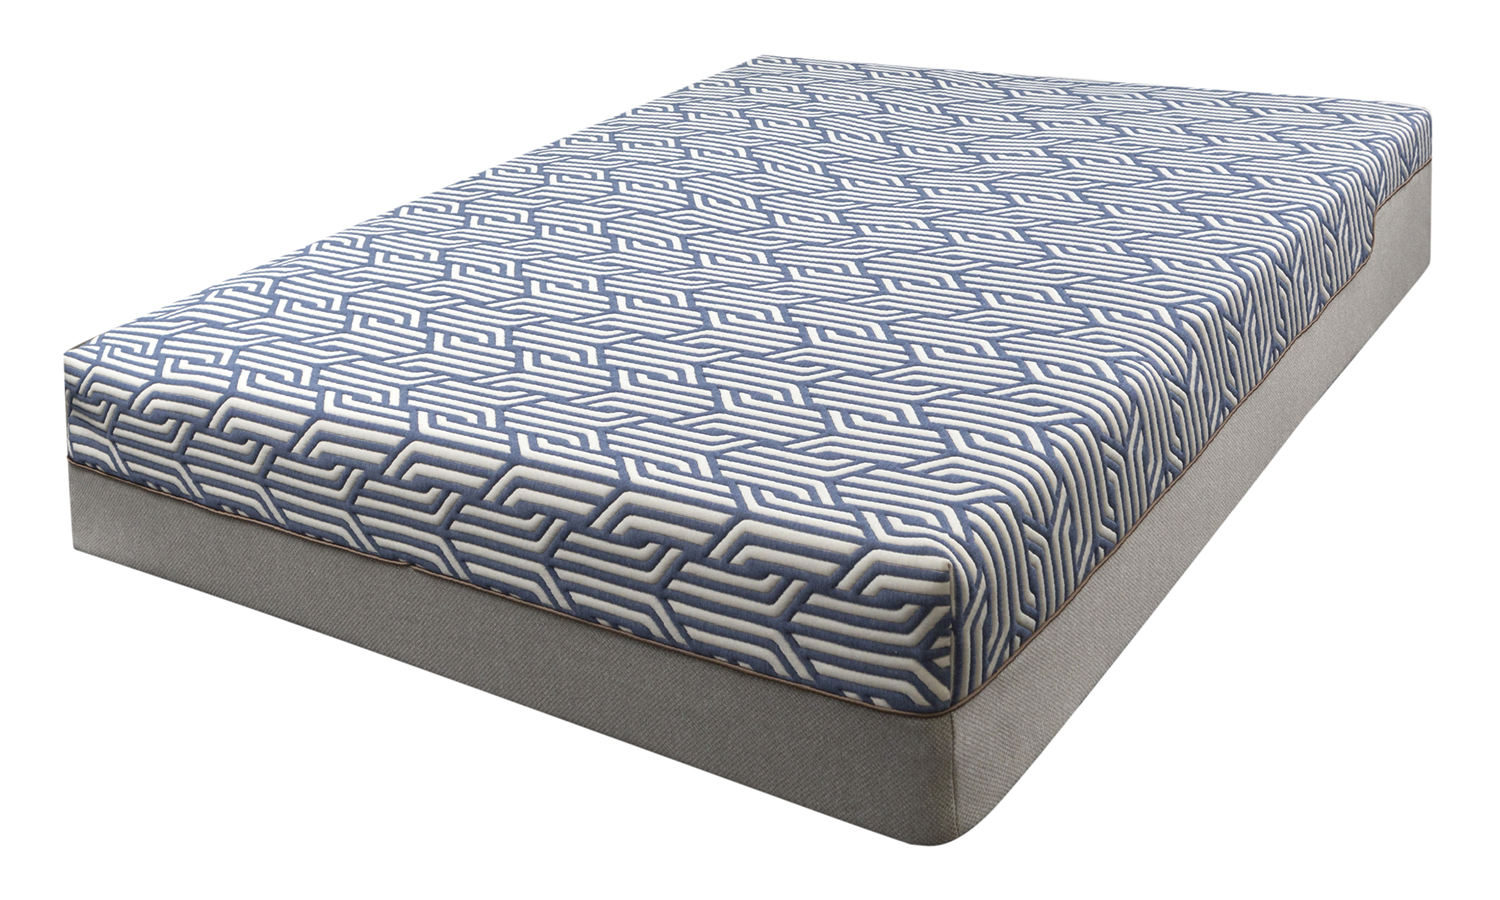 mattress cover at darvins